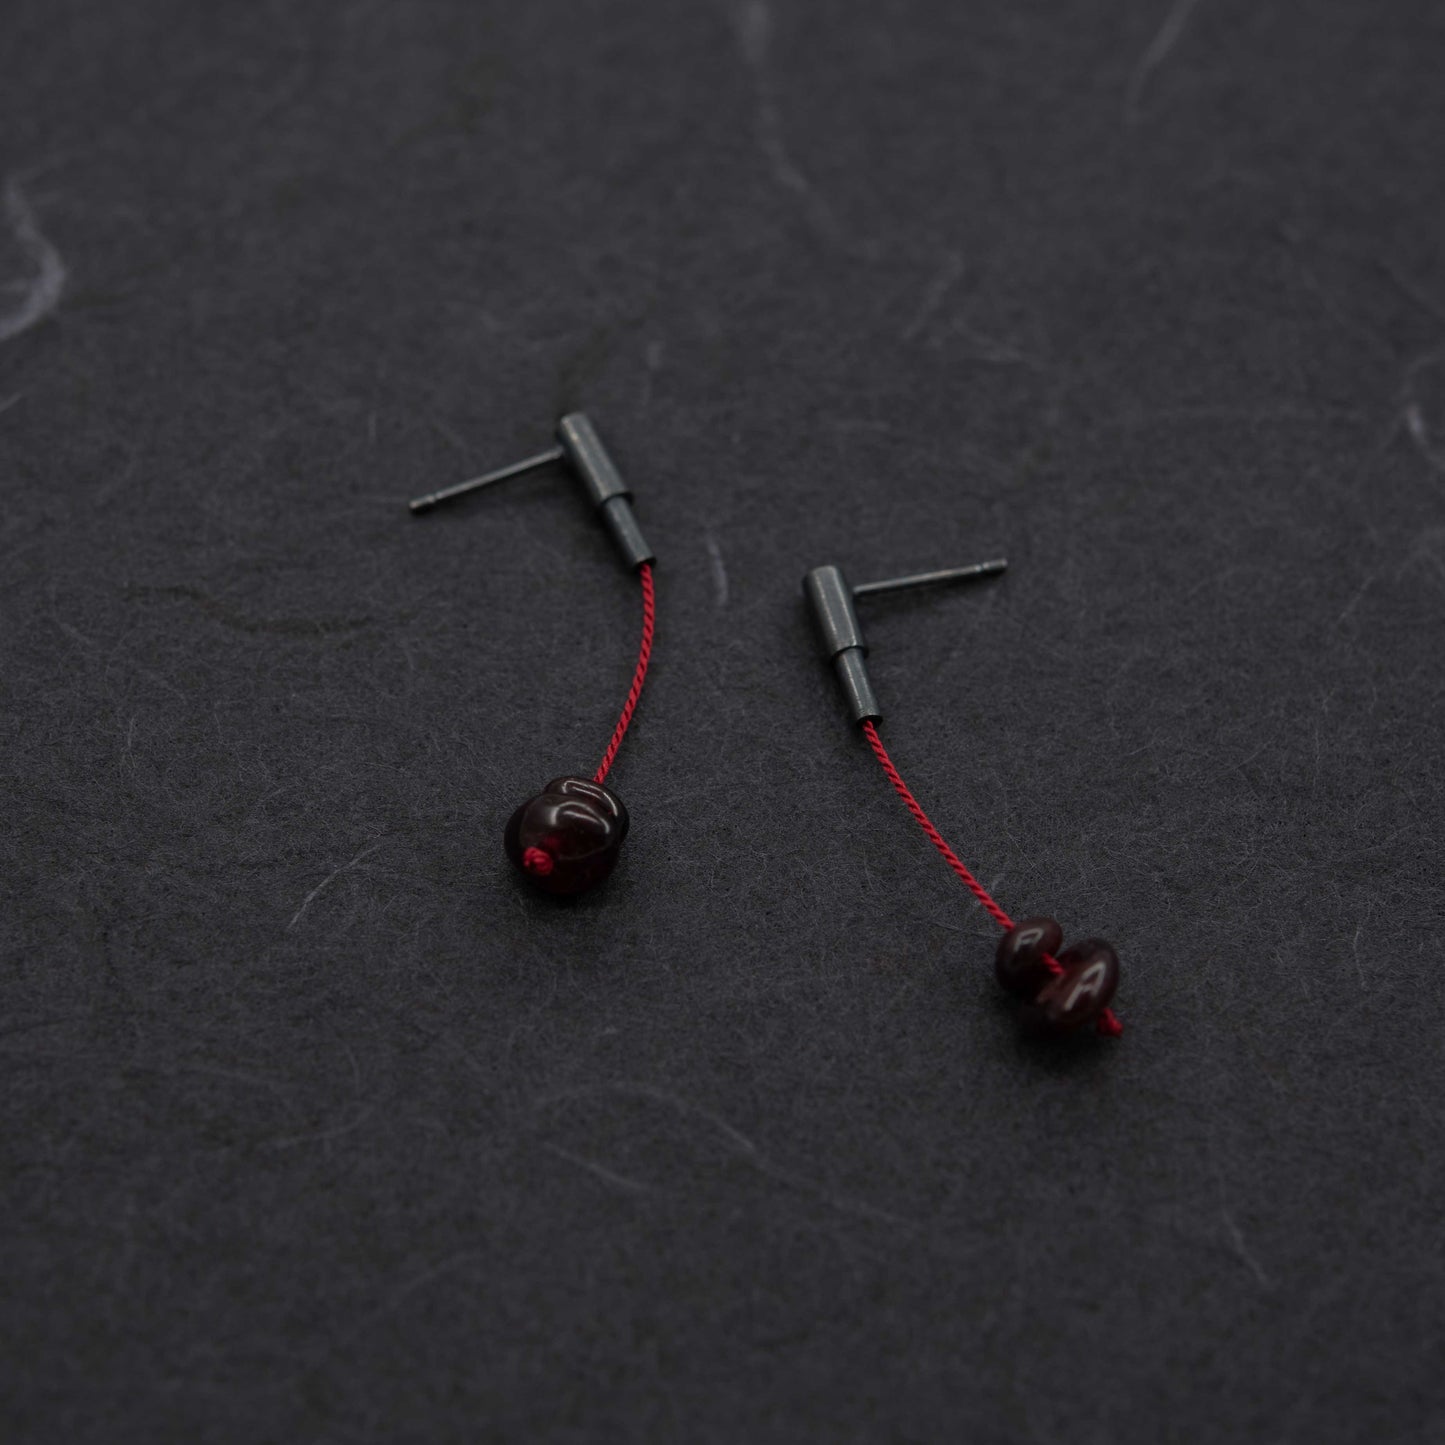 Garnet stone dangle earrings in oxidized silver with red silk cord